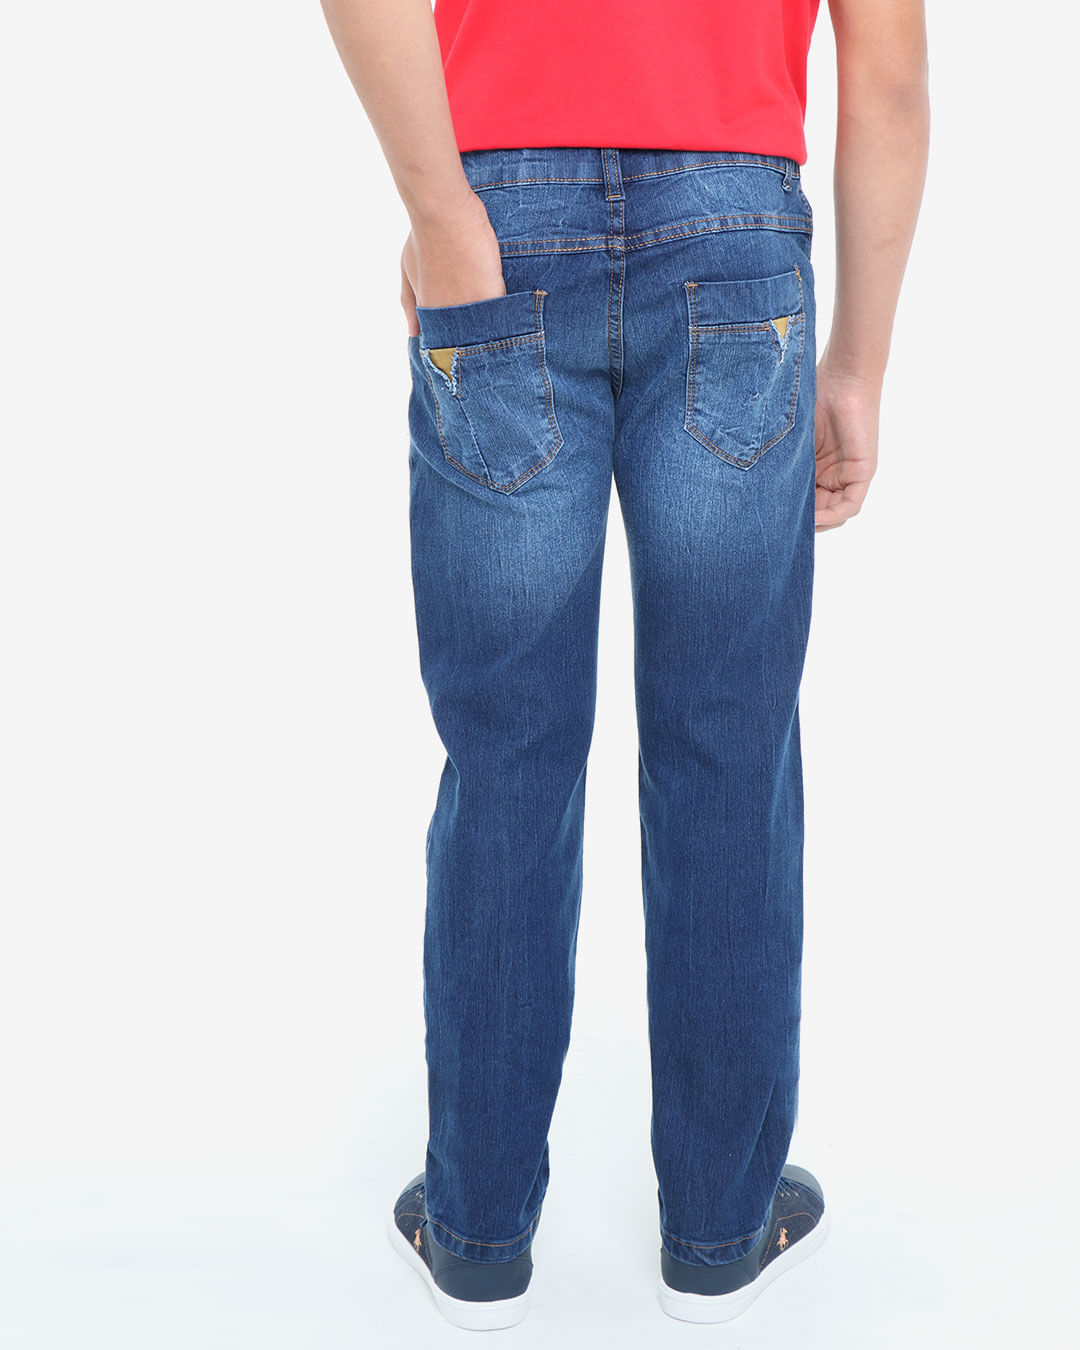 Calca-Jeans-Juvenil-Puidos-Azul